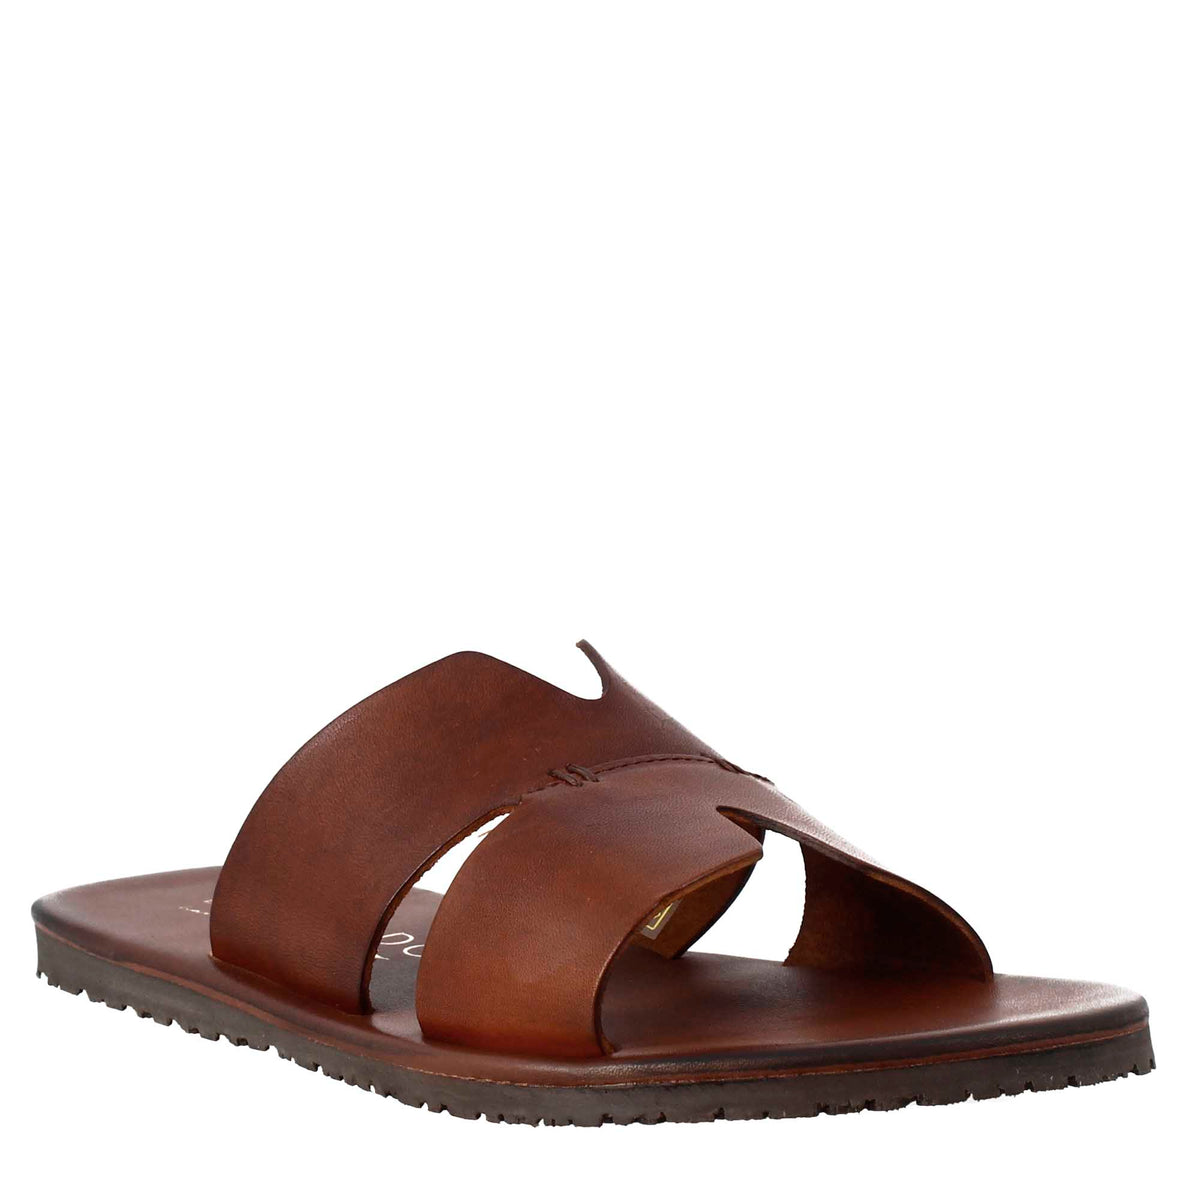 Men's Leather Sandals & Leather Flip Flops